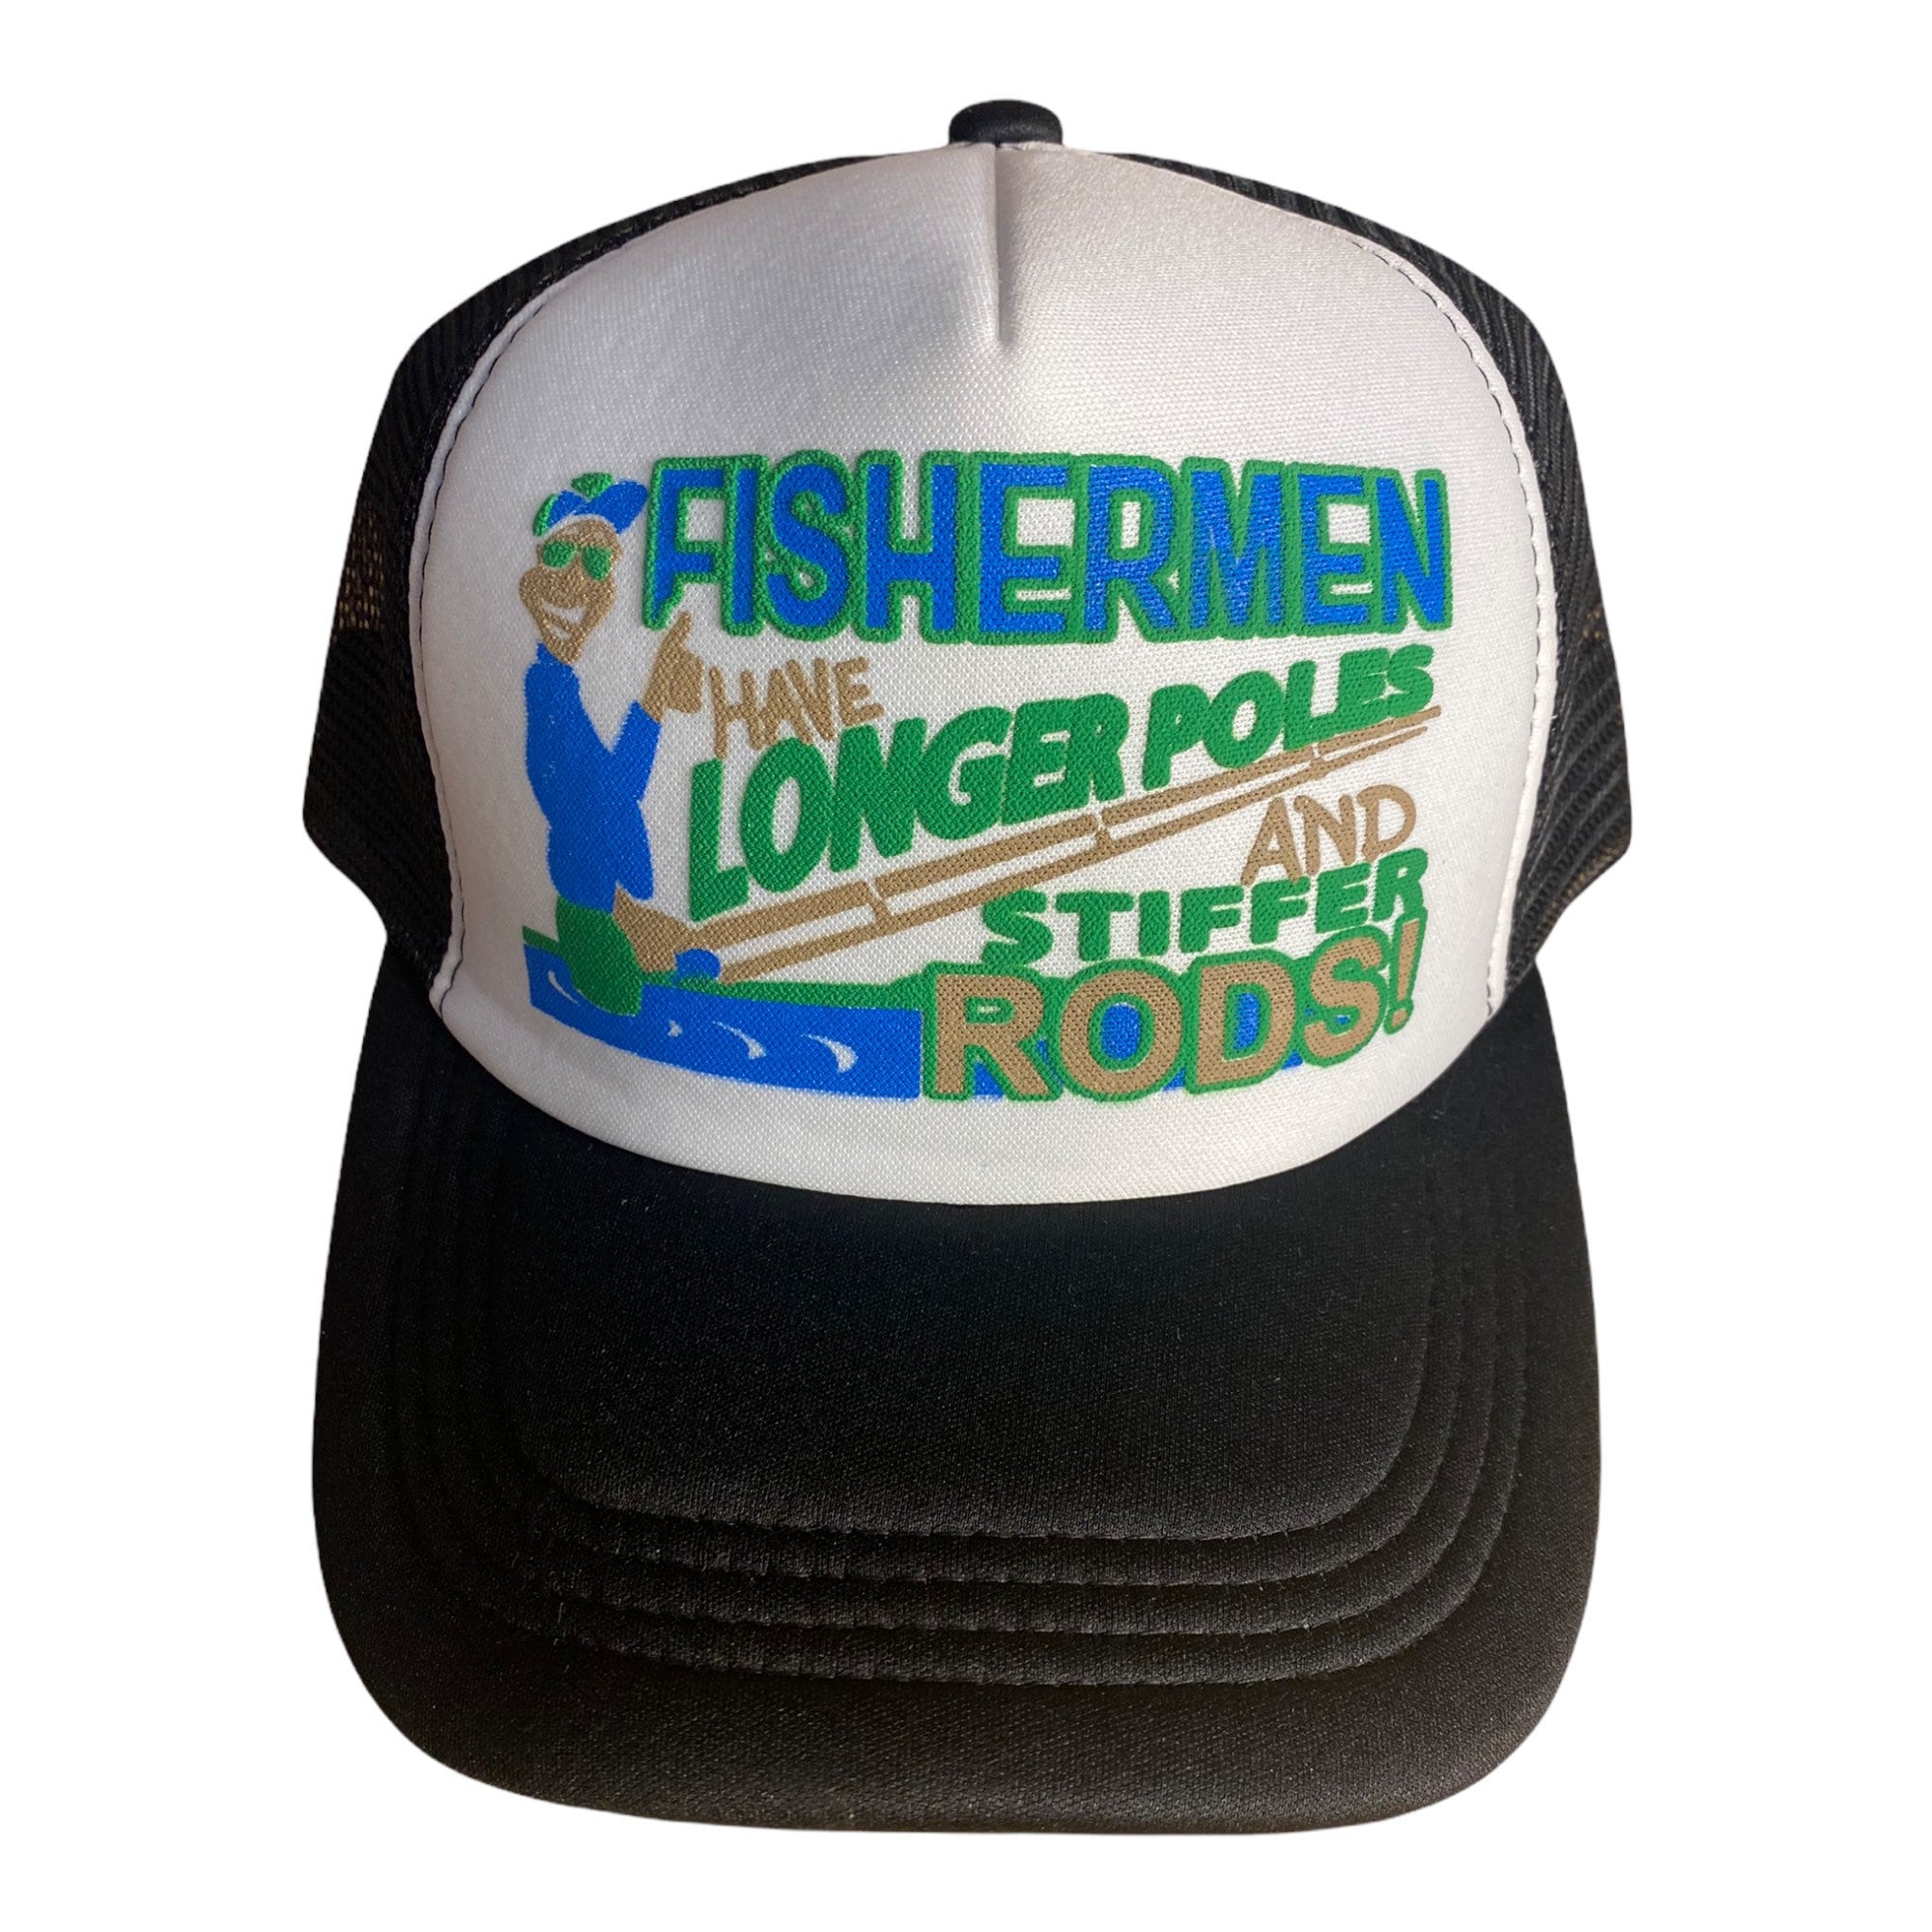 Vintage Fishing Hat // Fisherman Have Longer Poles and Stiffer